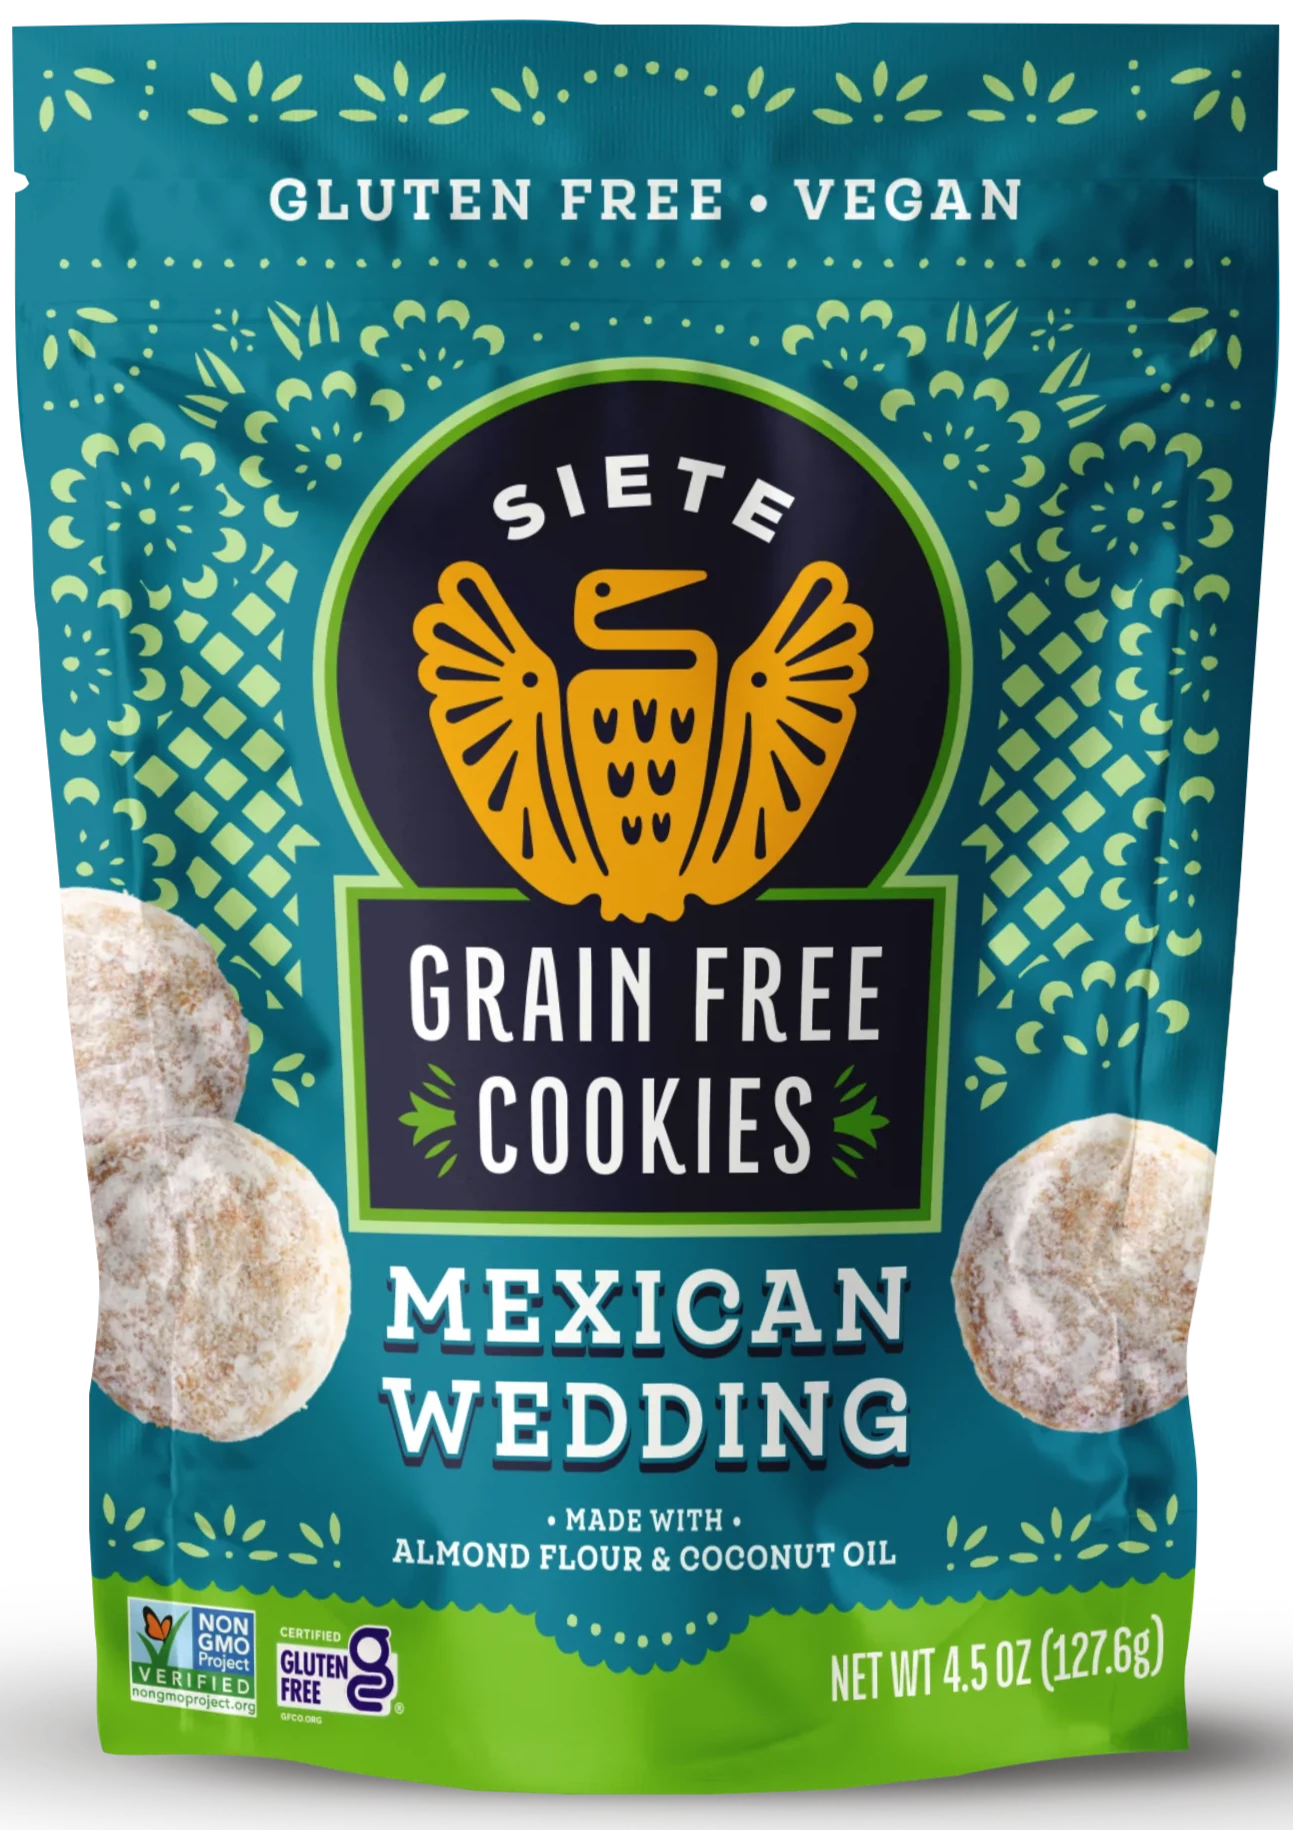 Siete Cookies, Grain Free, Mexican Shortbread - 4.5 oz